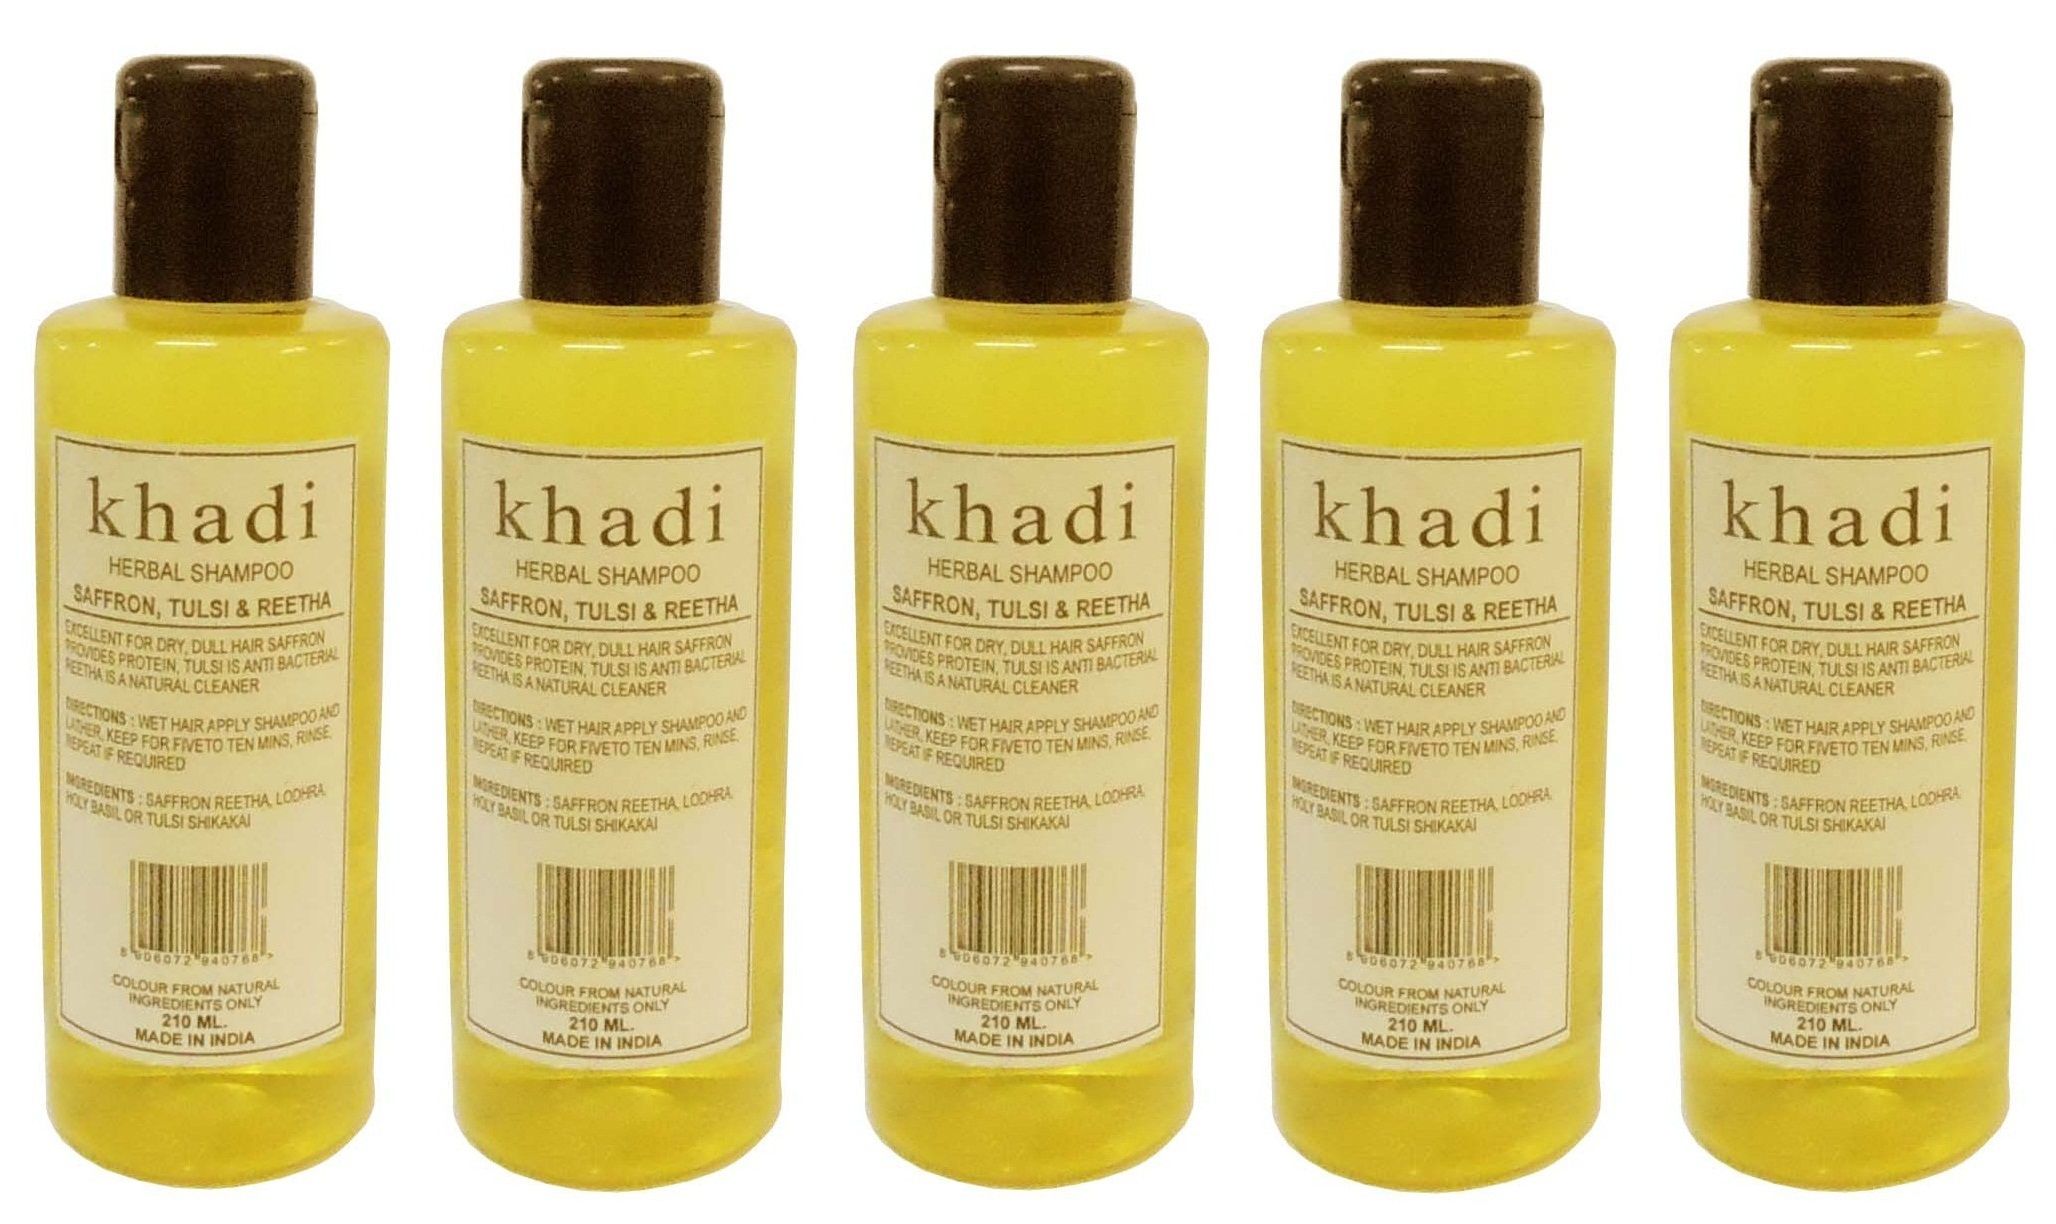     			Khadi Herbal Saffron, Tulsi & Reetha Shampoo 210 ml - Pack of 5